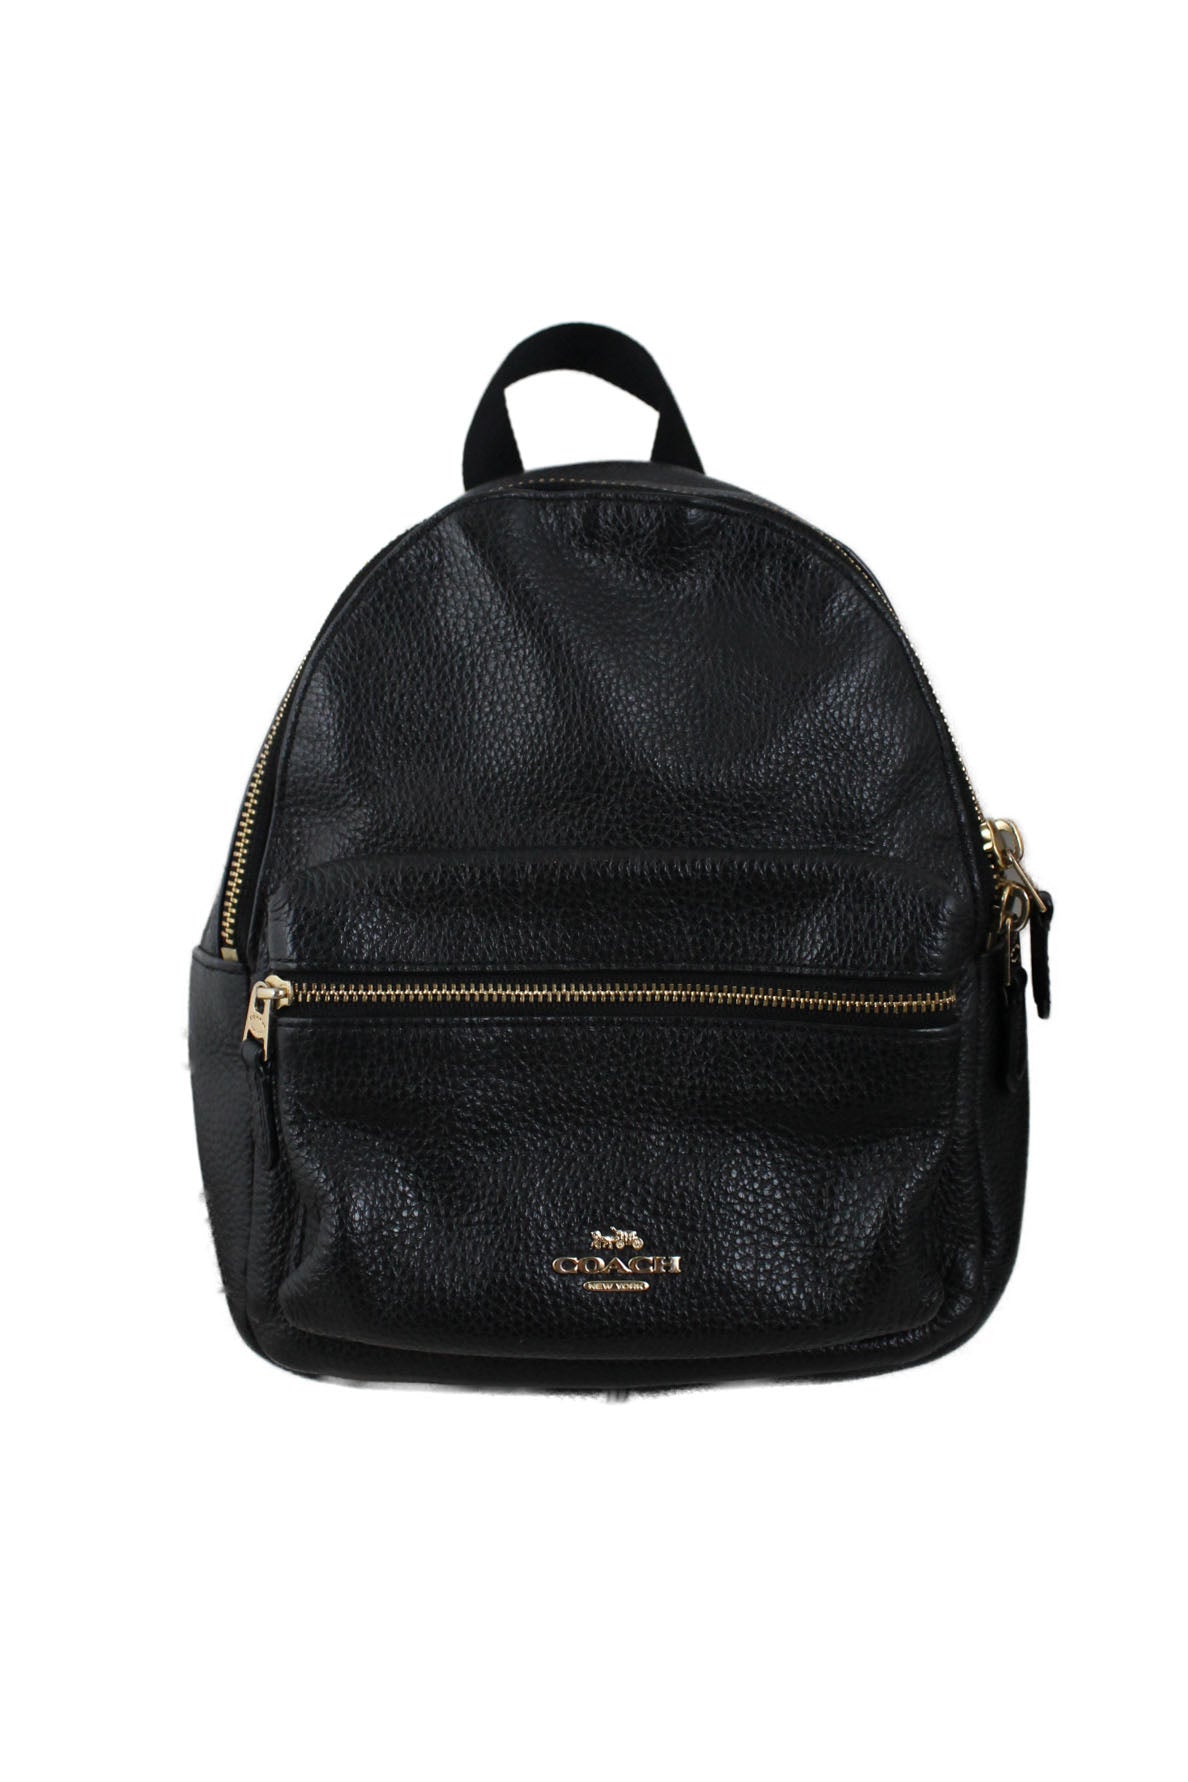 description: coach black leather mini backpack. features gold-tone hardware, zipper closure, exterior zip closure pocket, interior zip pocket, interior slit pocket, and adjustable straps. 